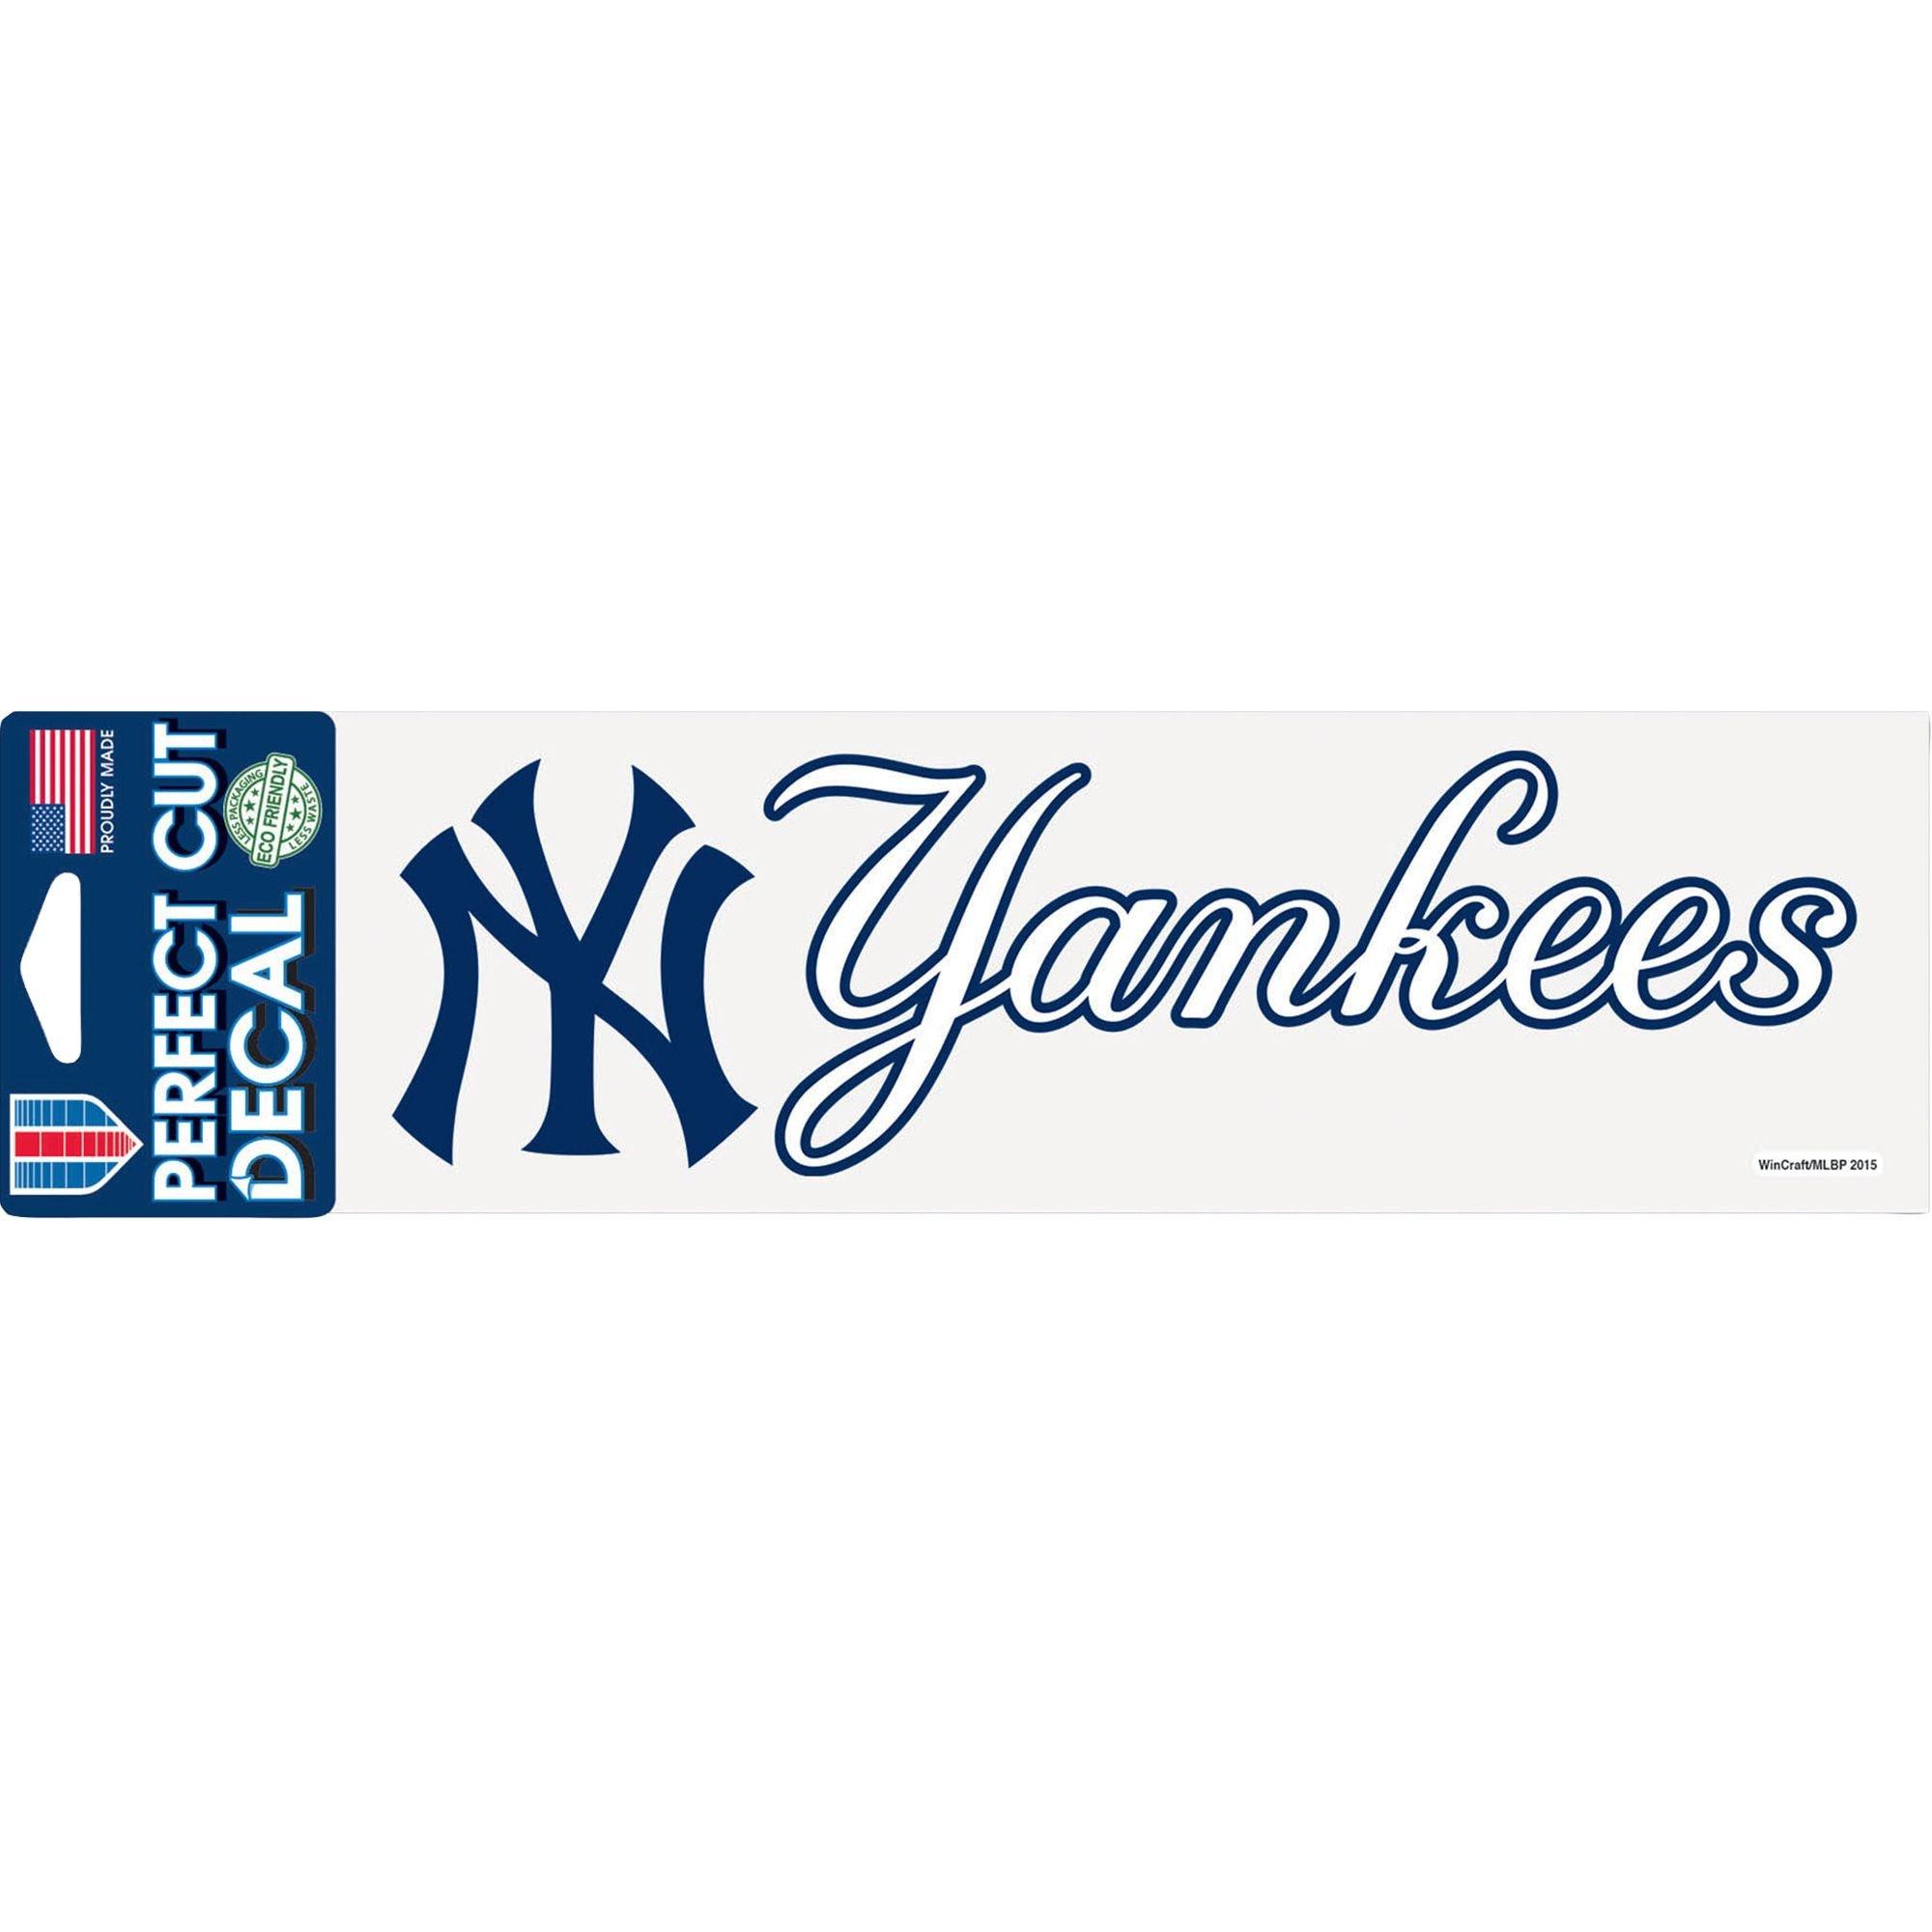 New York Yankees Greek Letters